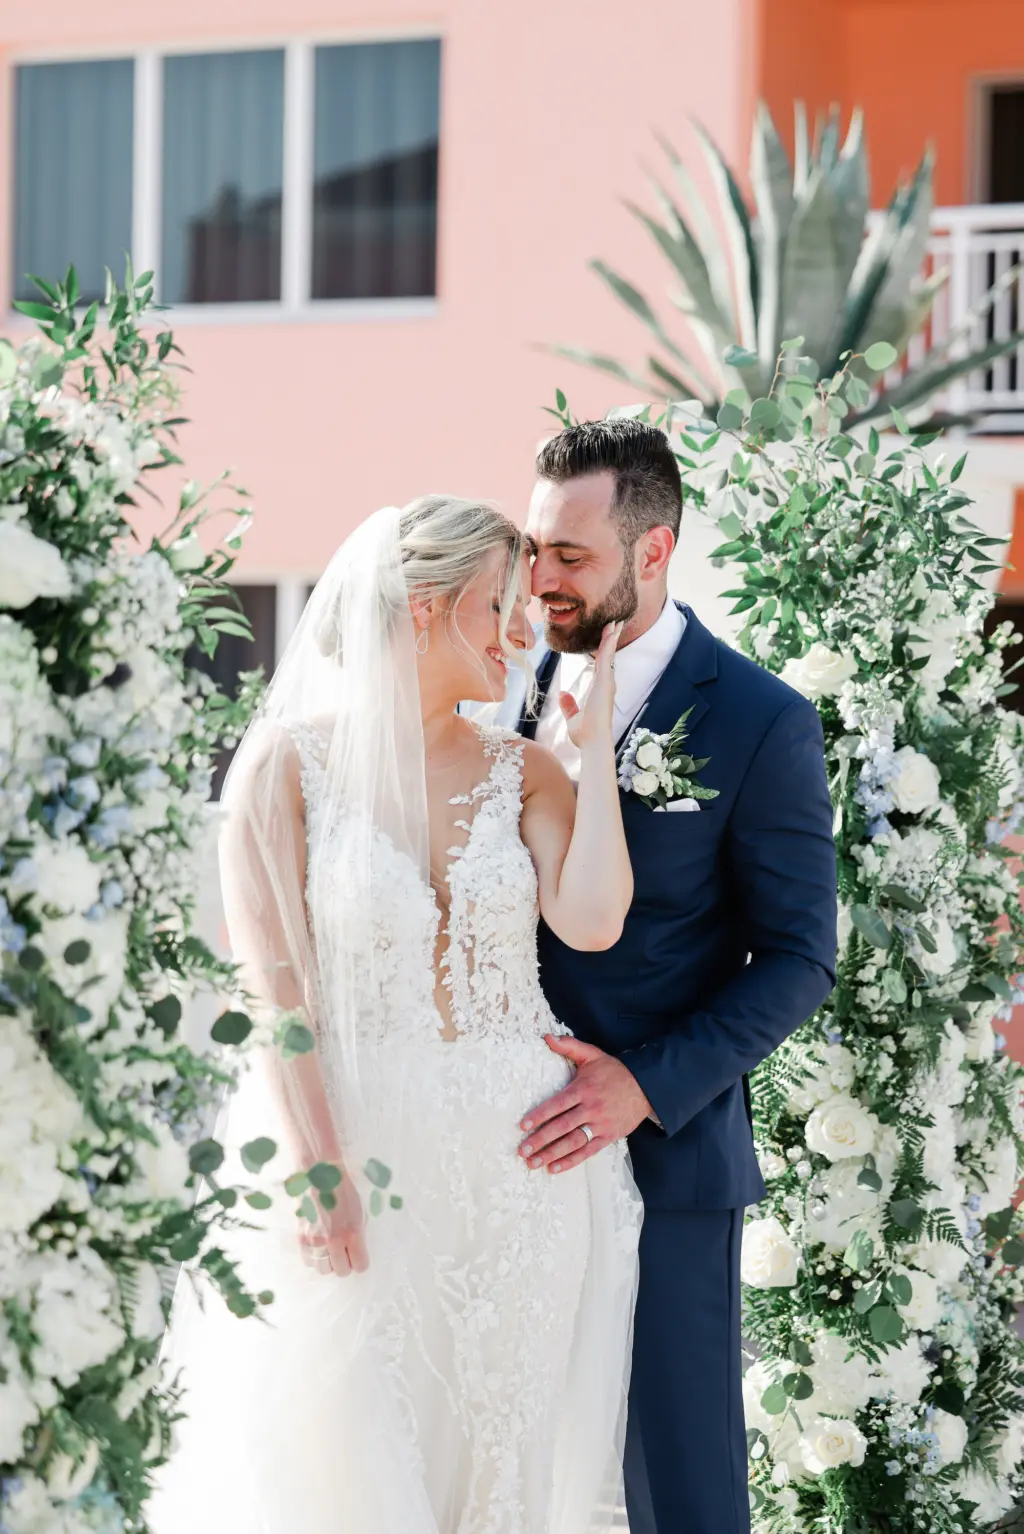 Intimate Bride and Groom Wedding Portrait | Tampa Bay Wedding Venue Hyatt Clearwater Beach | Photographer Lifelong Photography Studio | Planner Coastal Coordinating